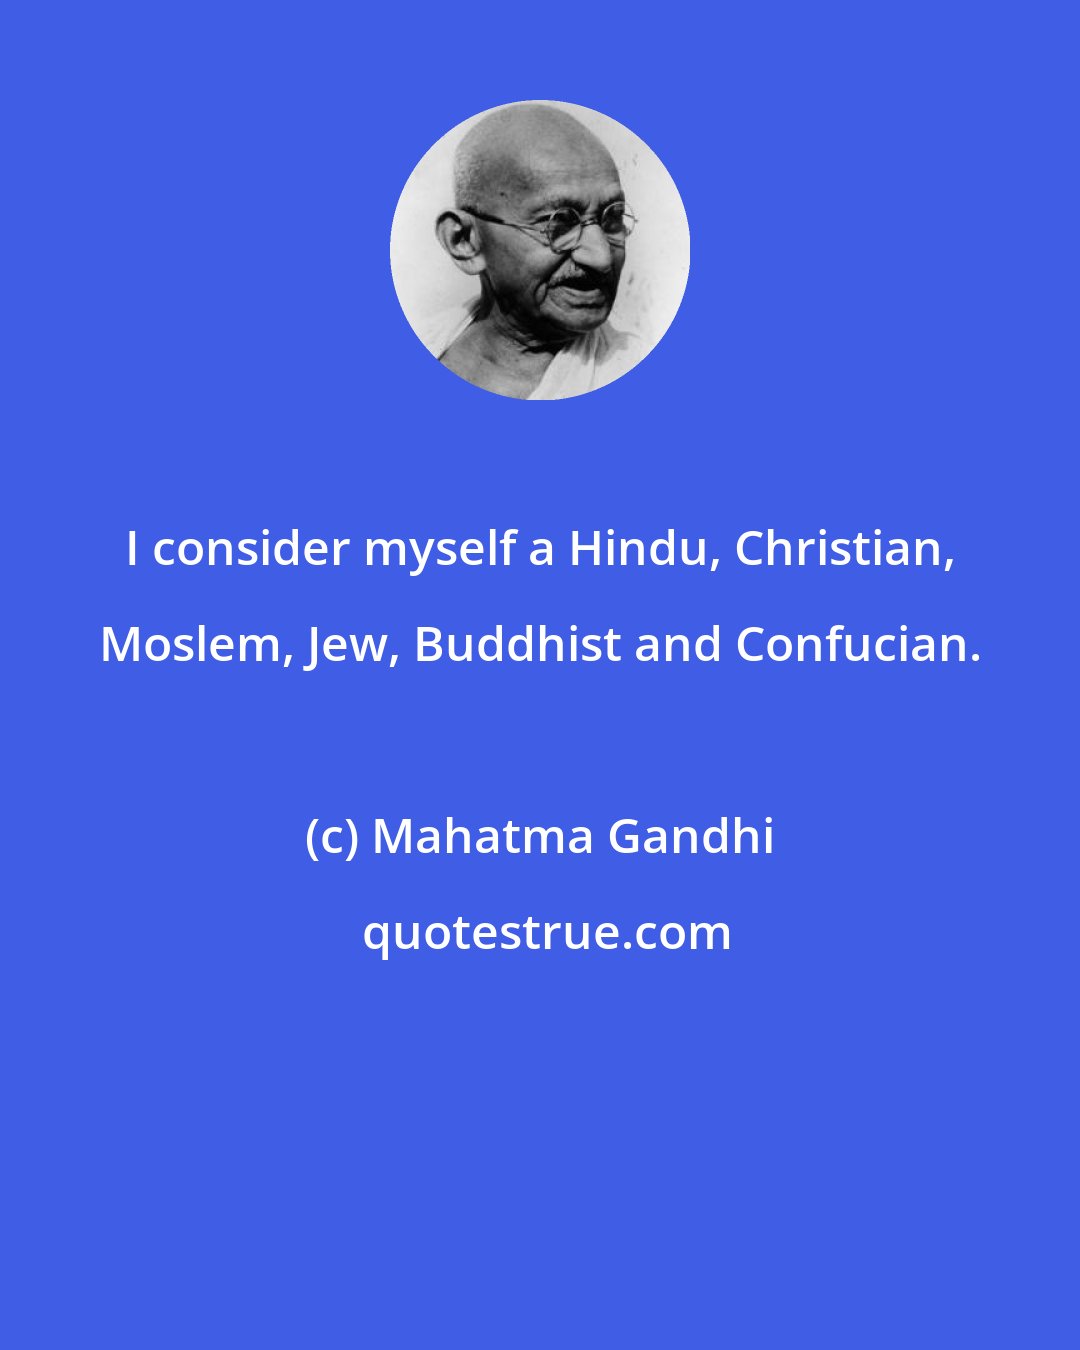 Mahatma Gandhi: I consider myself a Hindu, Christian, Moslem, Jew, Buddhist and Confucian.